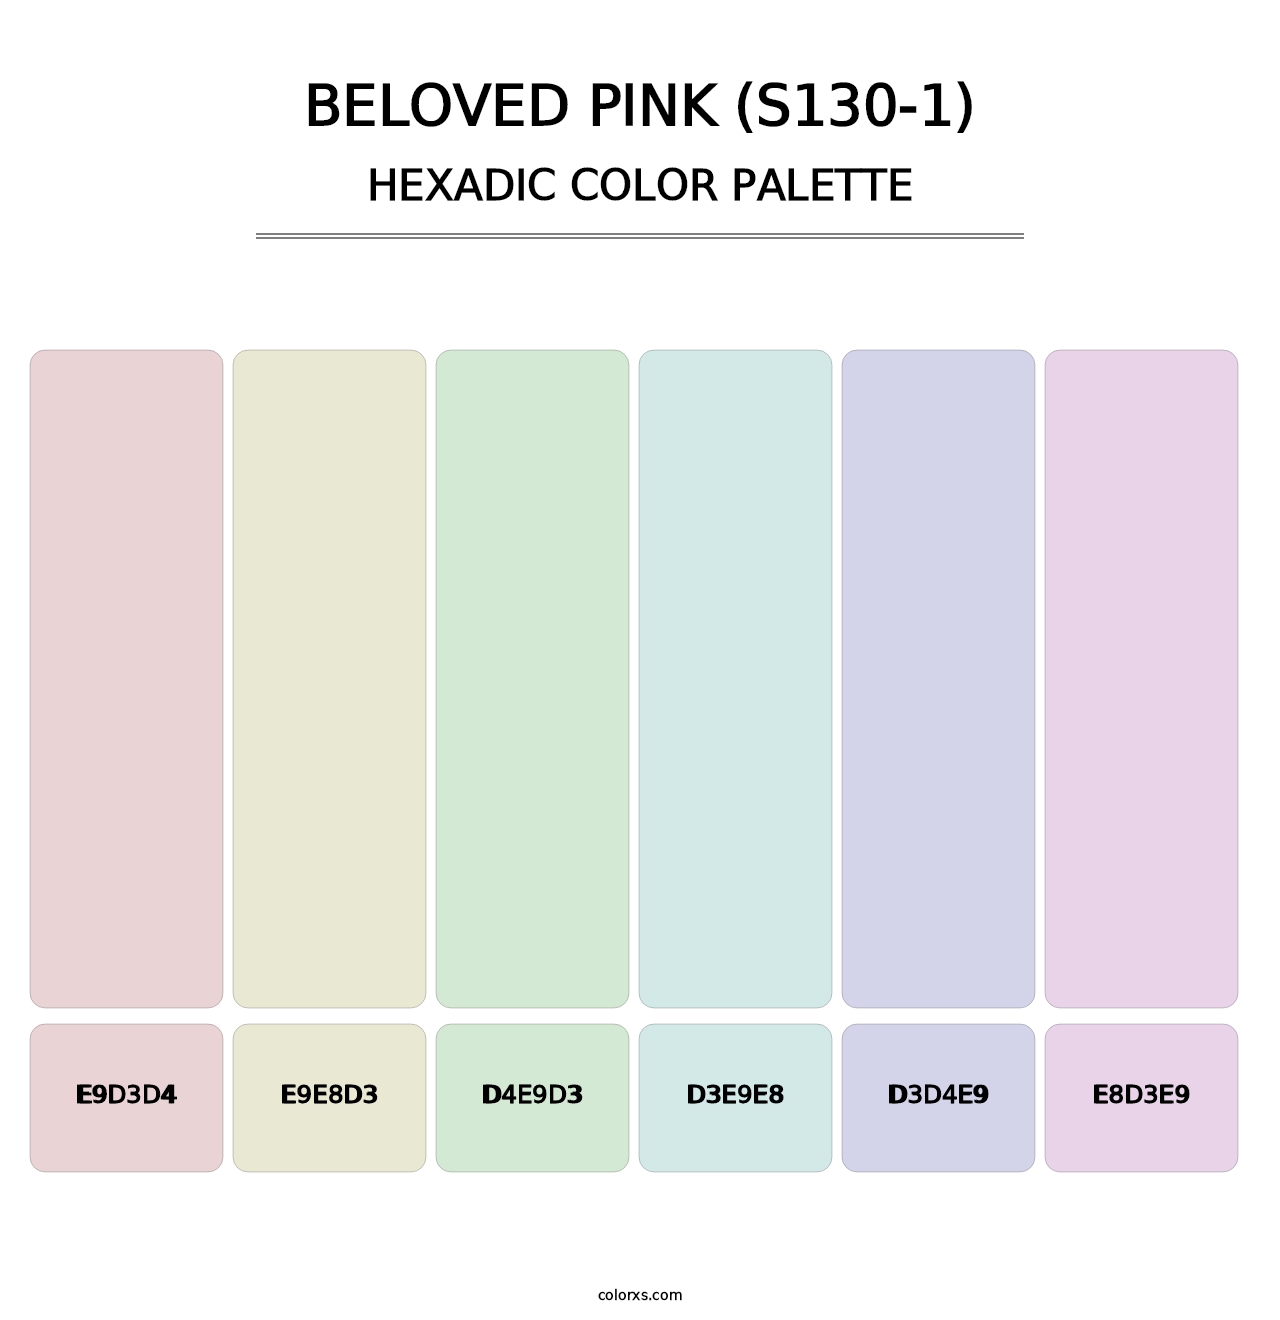 Beloved Pink (S130-1) - Hexadic Color Palette